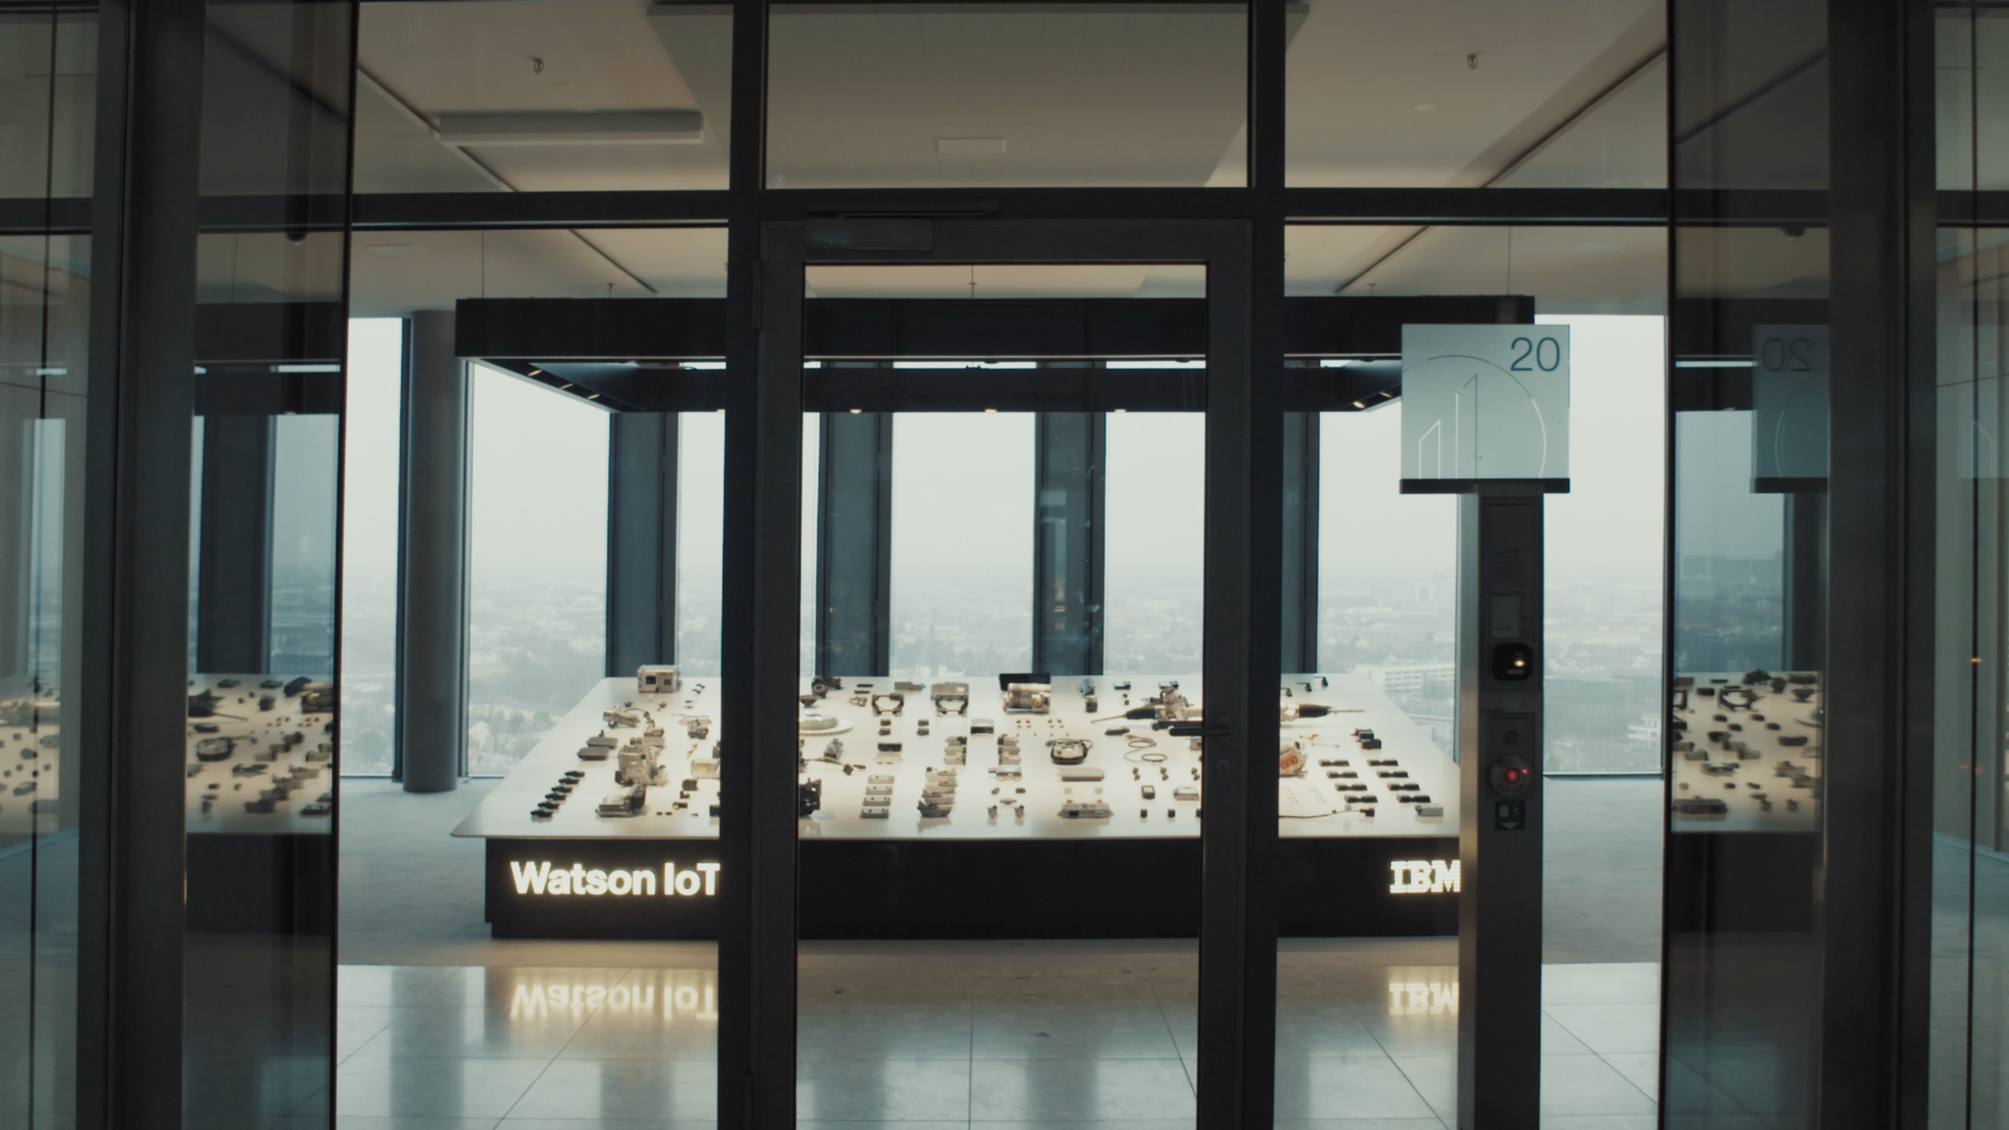 IBM - Watson IoT